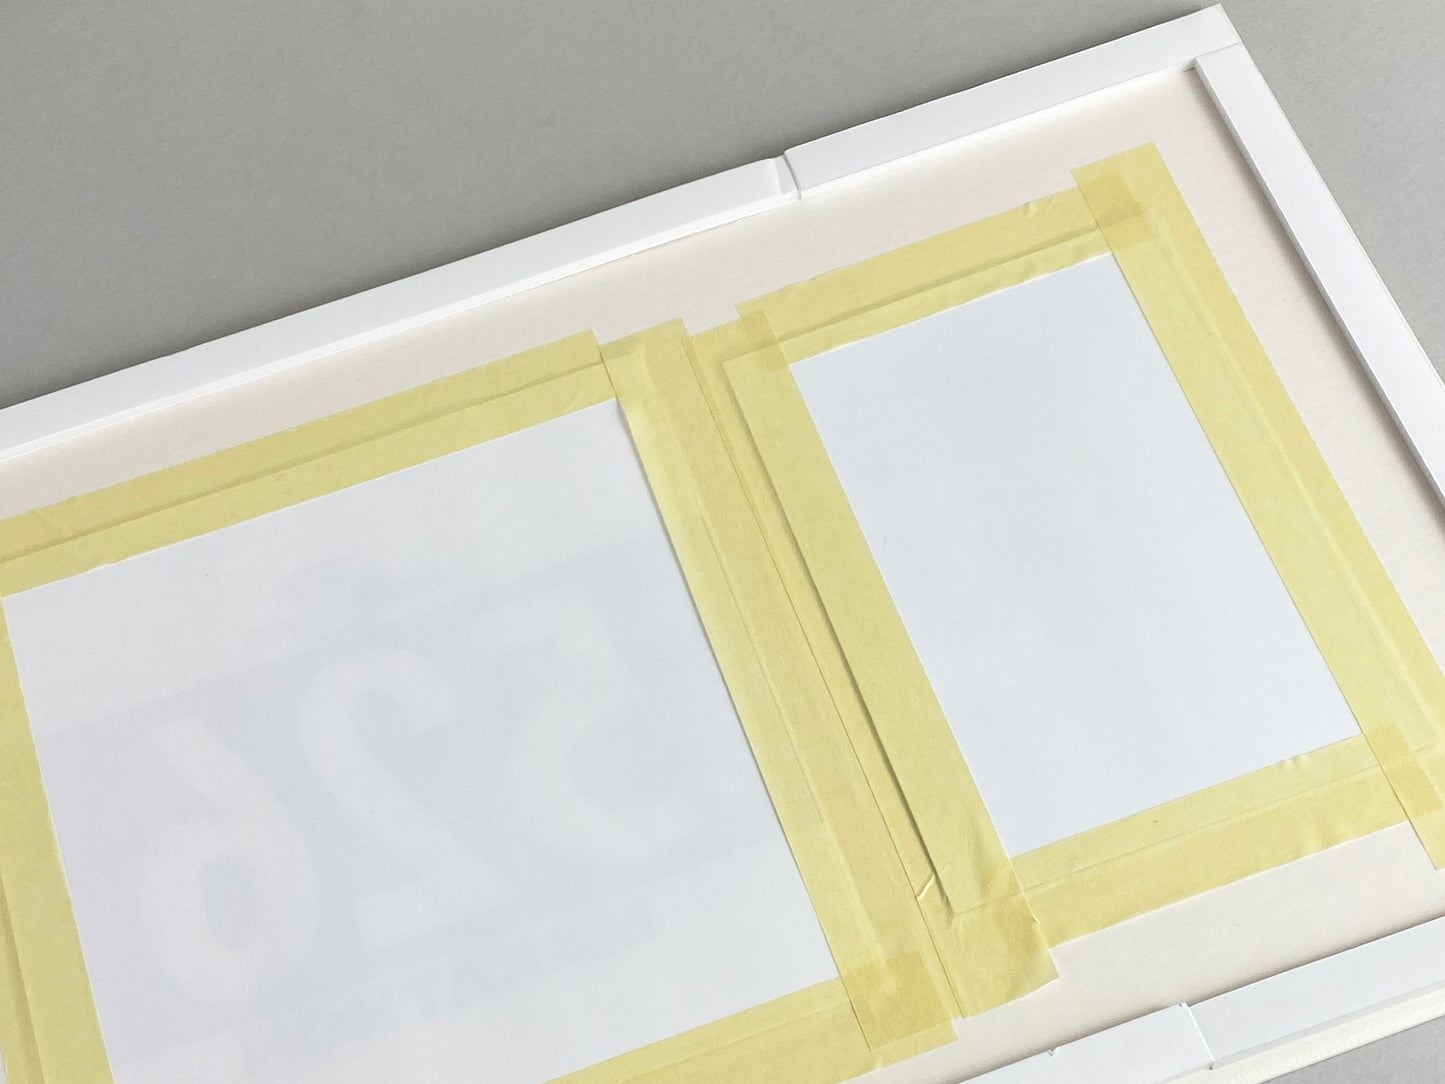 Medal display Frame with Apertures for Medal & Bib. A3 Size. - PhotoFramesandMore - Wooden Picture Frames